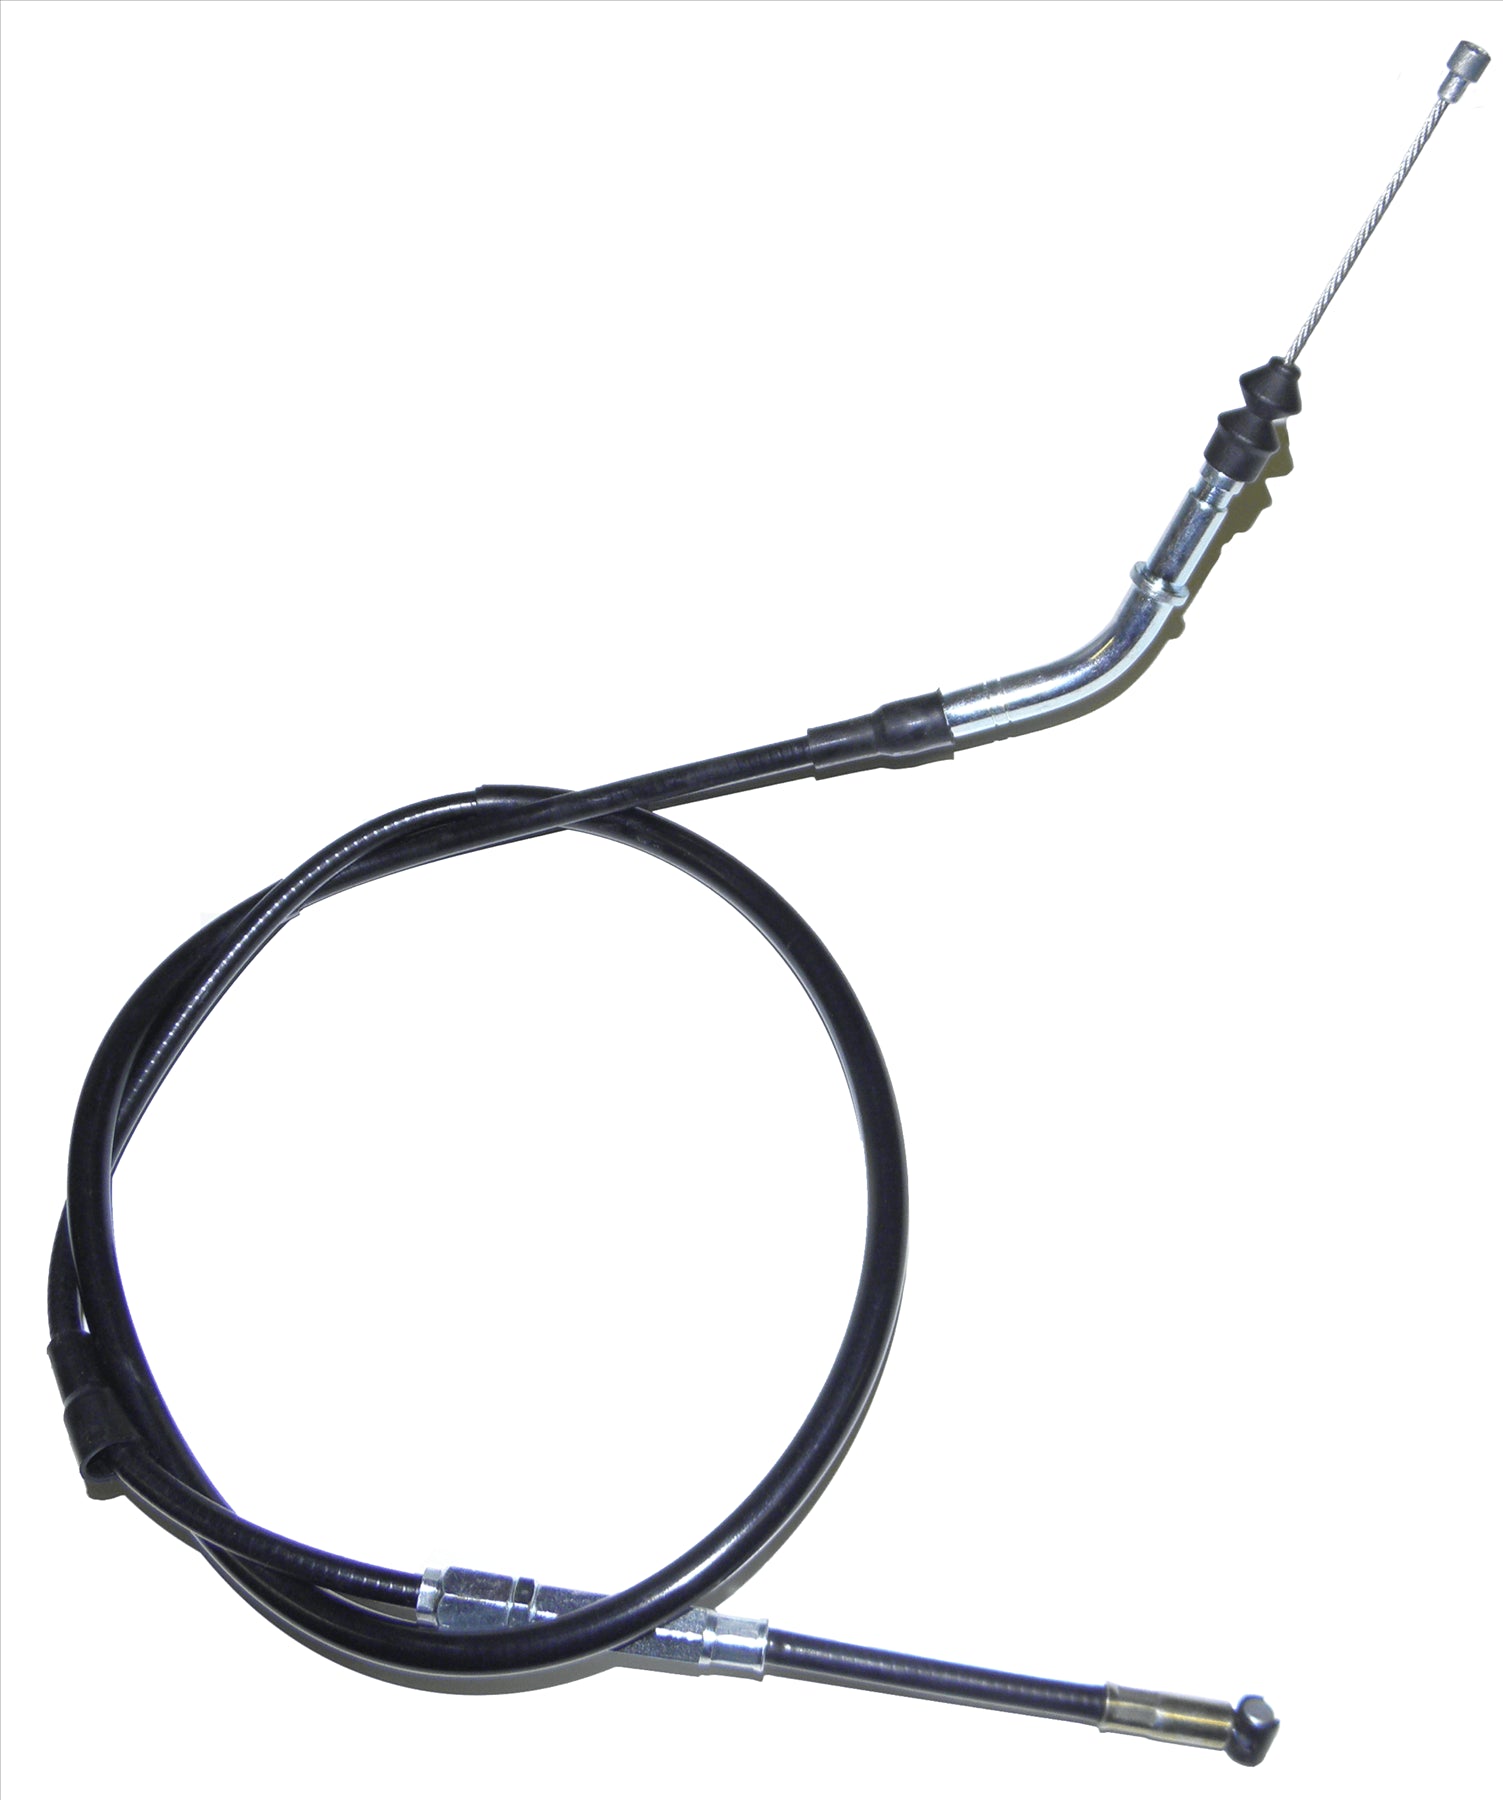 Apico Black Clutch Cable For Suzuki RMZ 250 2007-2009